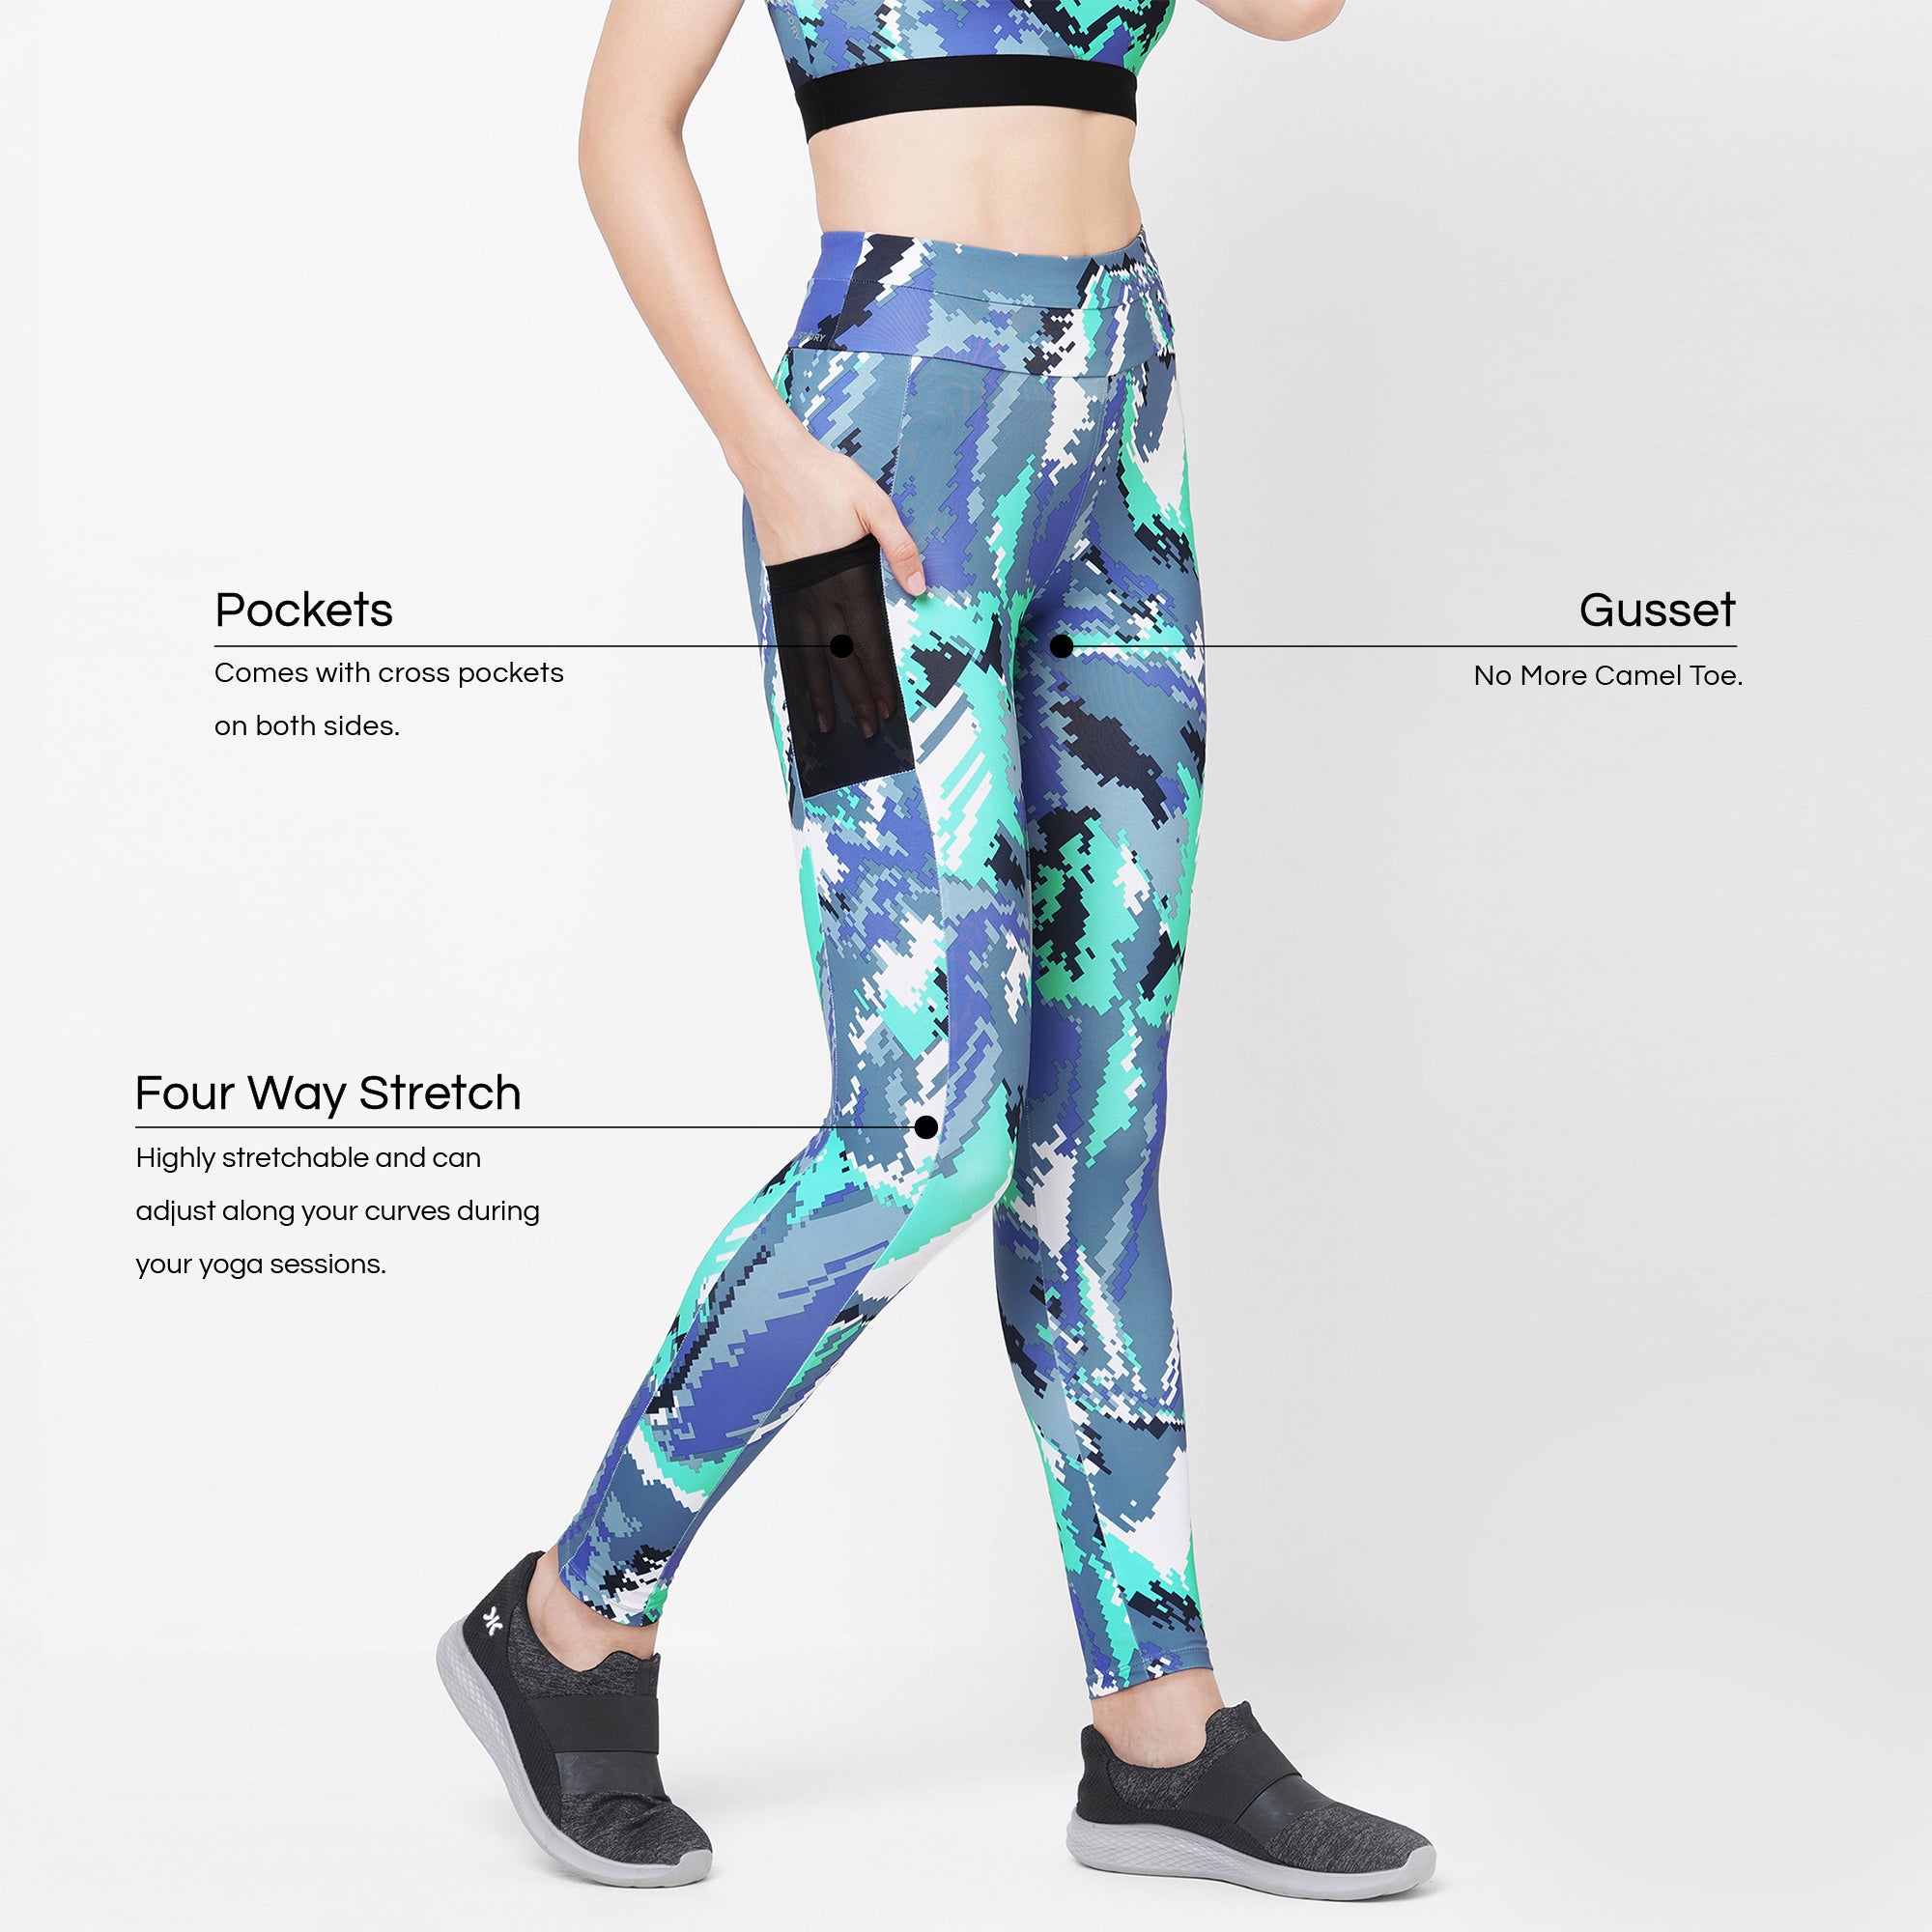 Buy ALWAYS Women's Camo Yoga Leggings - Premium Soft Stretch Military Army  Print Pants Plus Size at Amazon.in